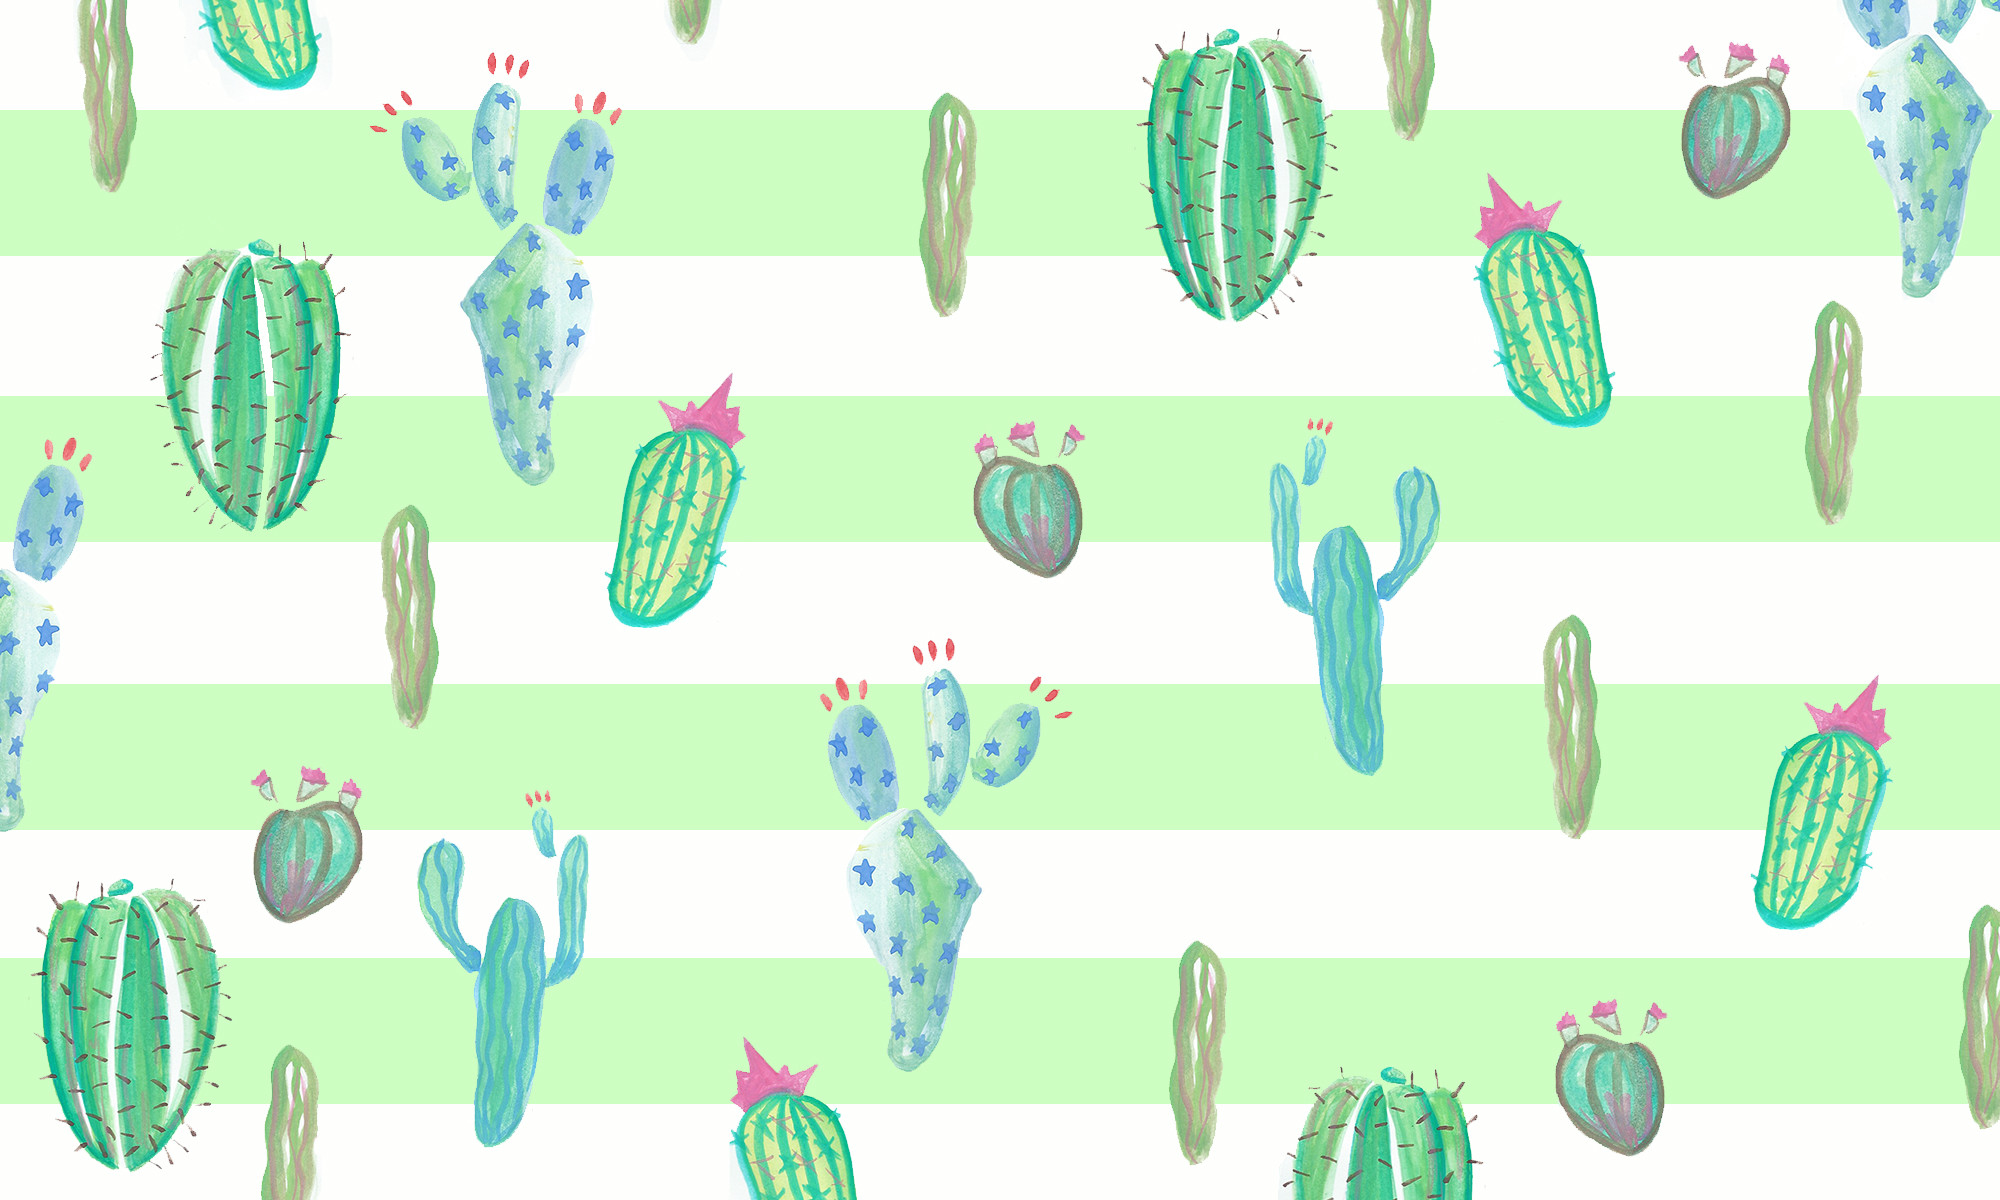 13200 Cute Cactus Backgrounds Illustrations RoyaltyFree Vector Graphics   Clip Art  iStock